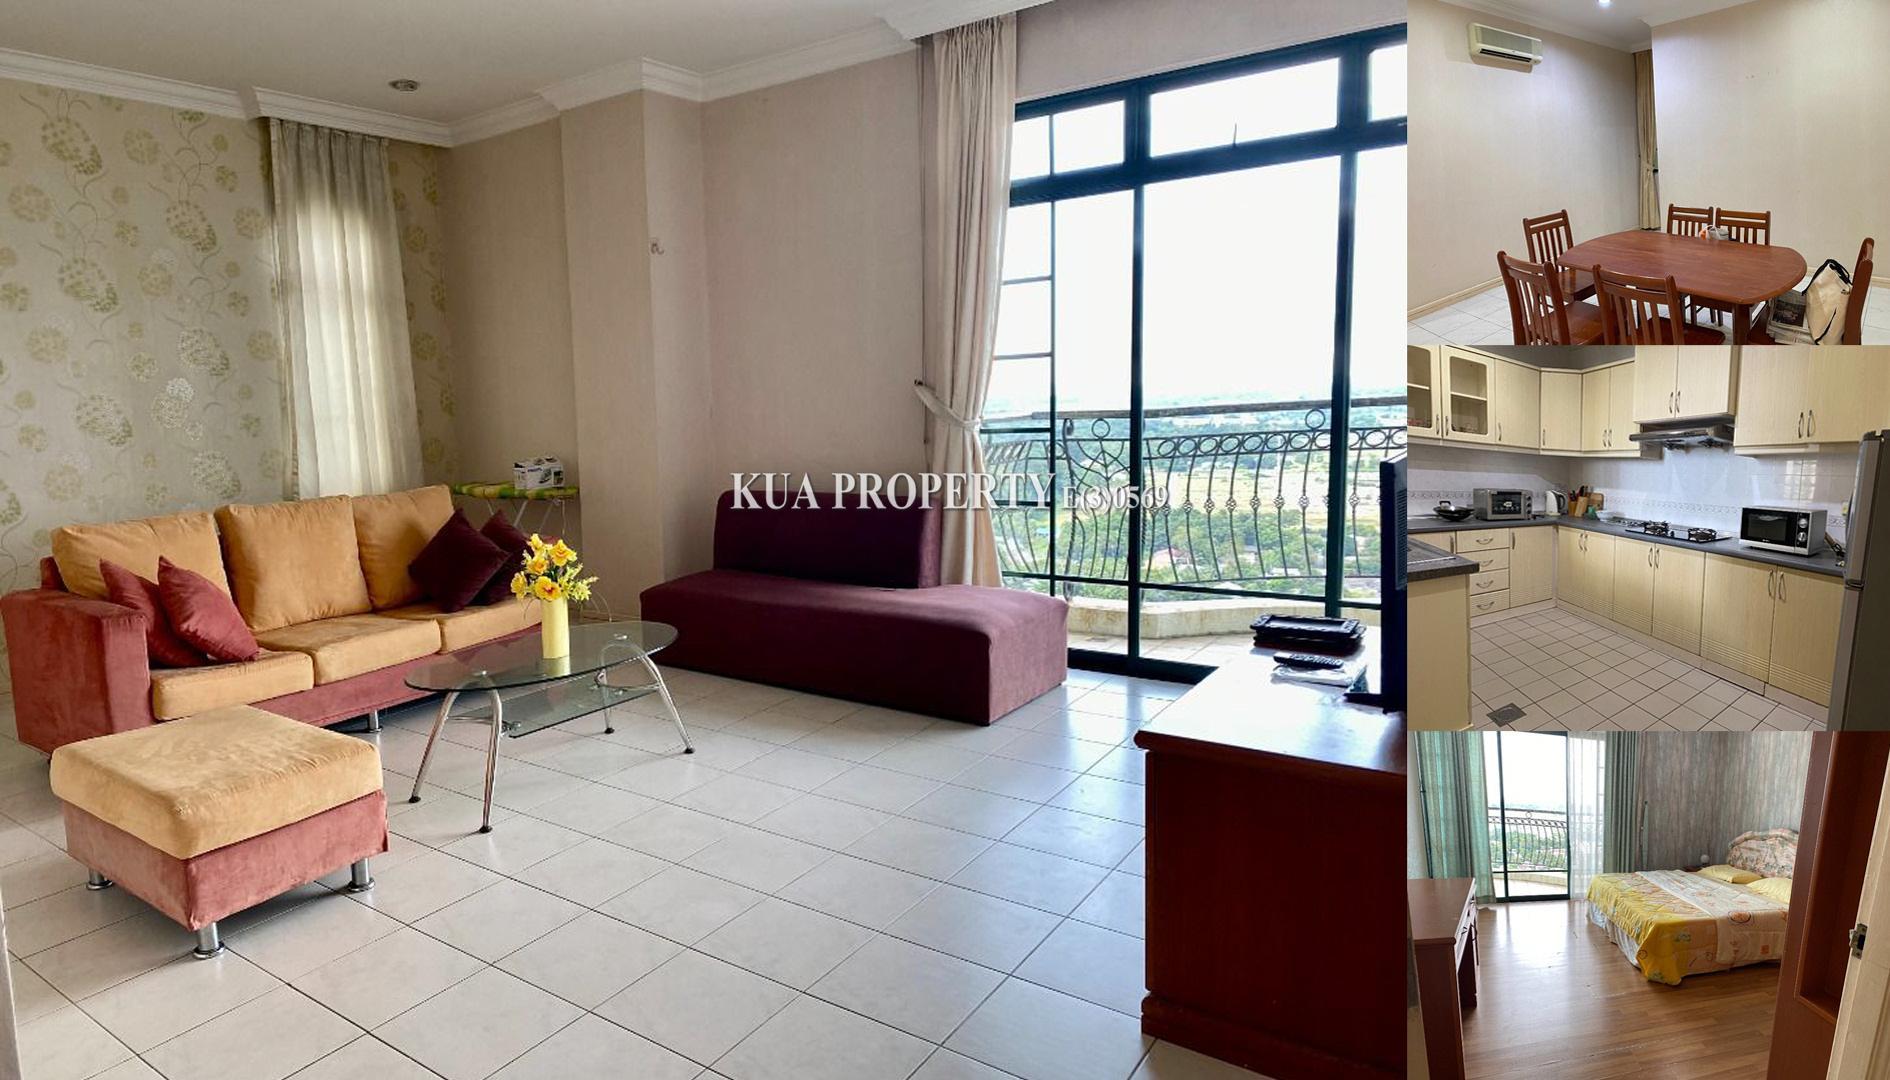 Riverine Emerald Condominium For Rent! at Jalan Petanak, Kuching